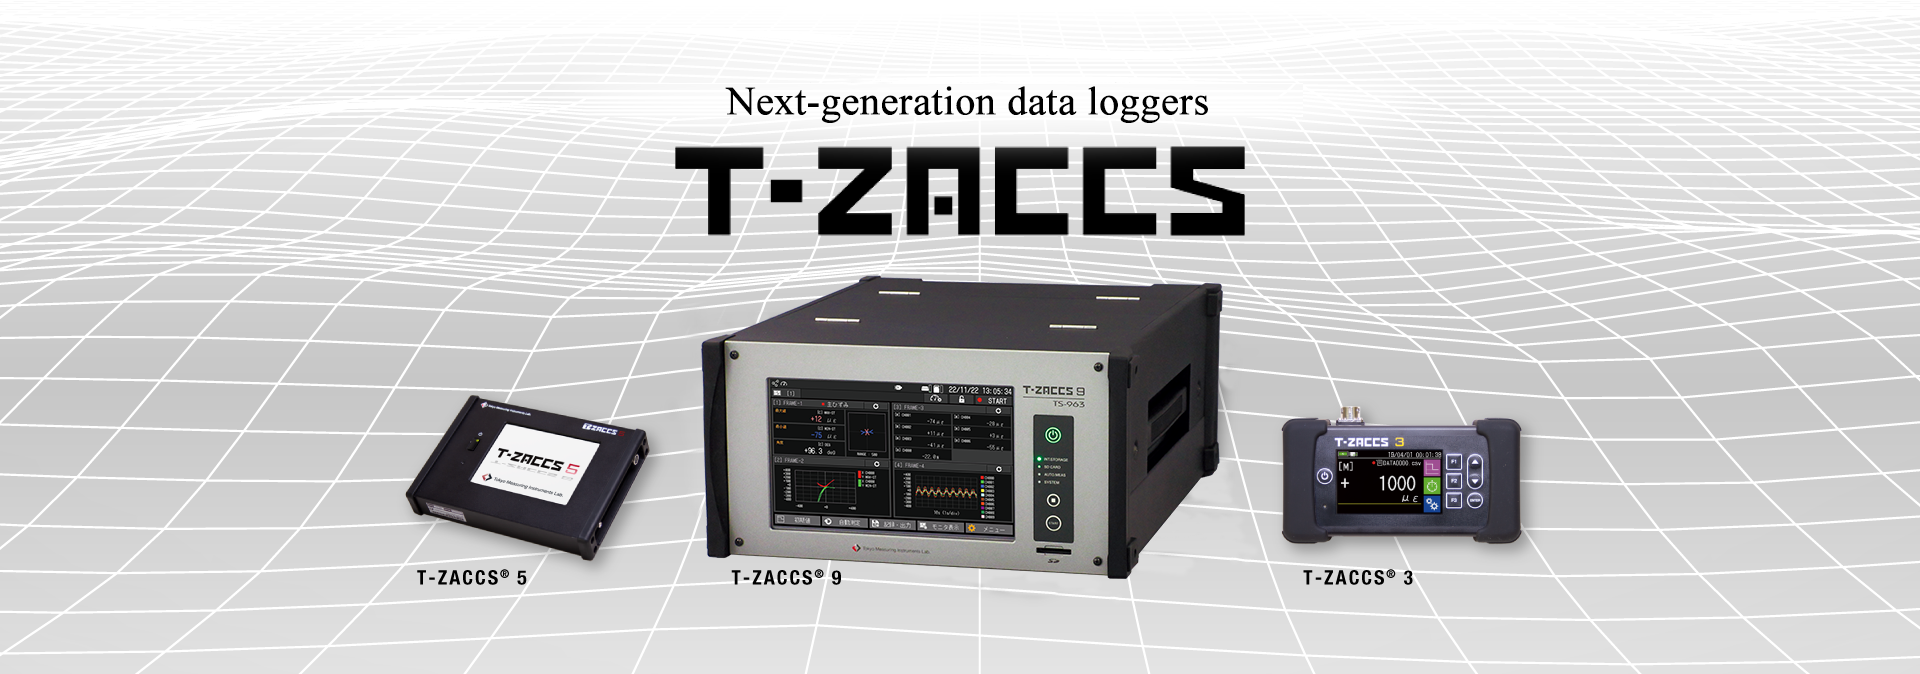 Next-generation data loggers T-ZACCS